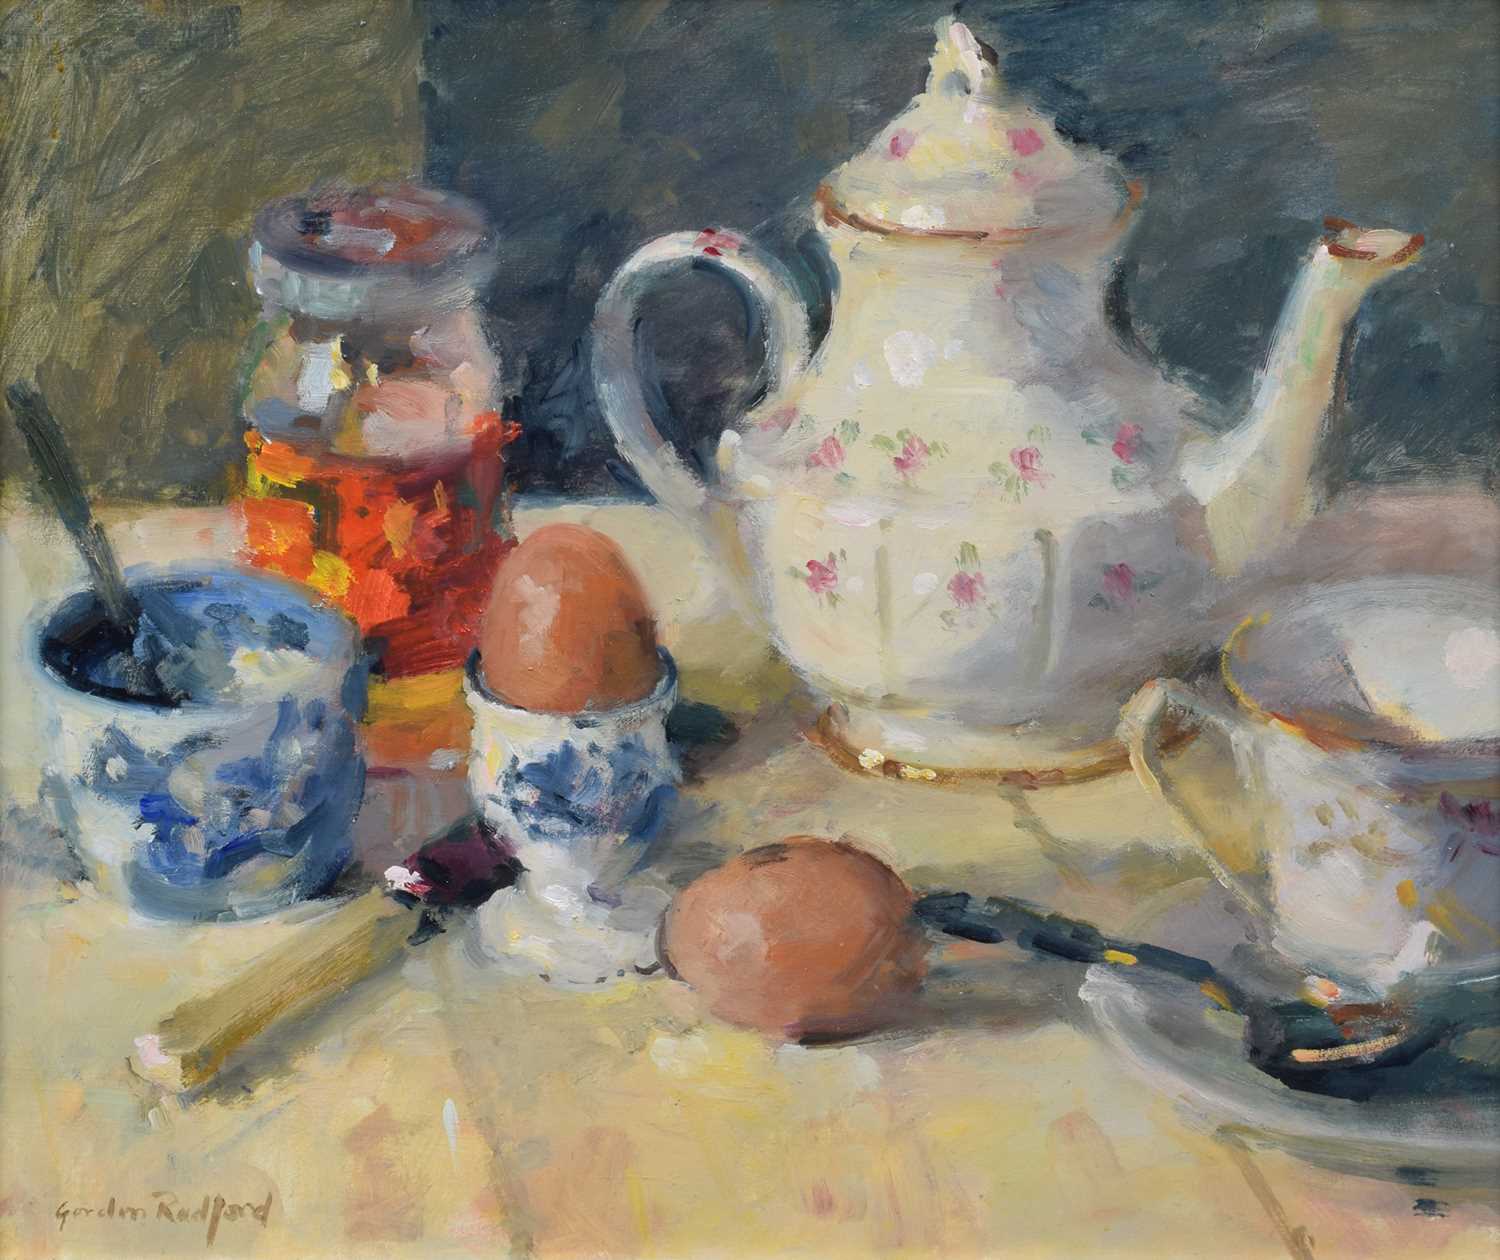 Lot 84 - Gordon Radford (British 1936-2015), "Breakfast", oil.